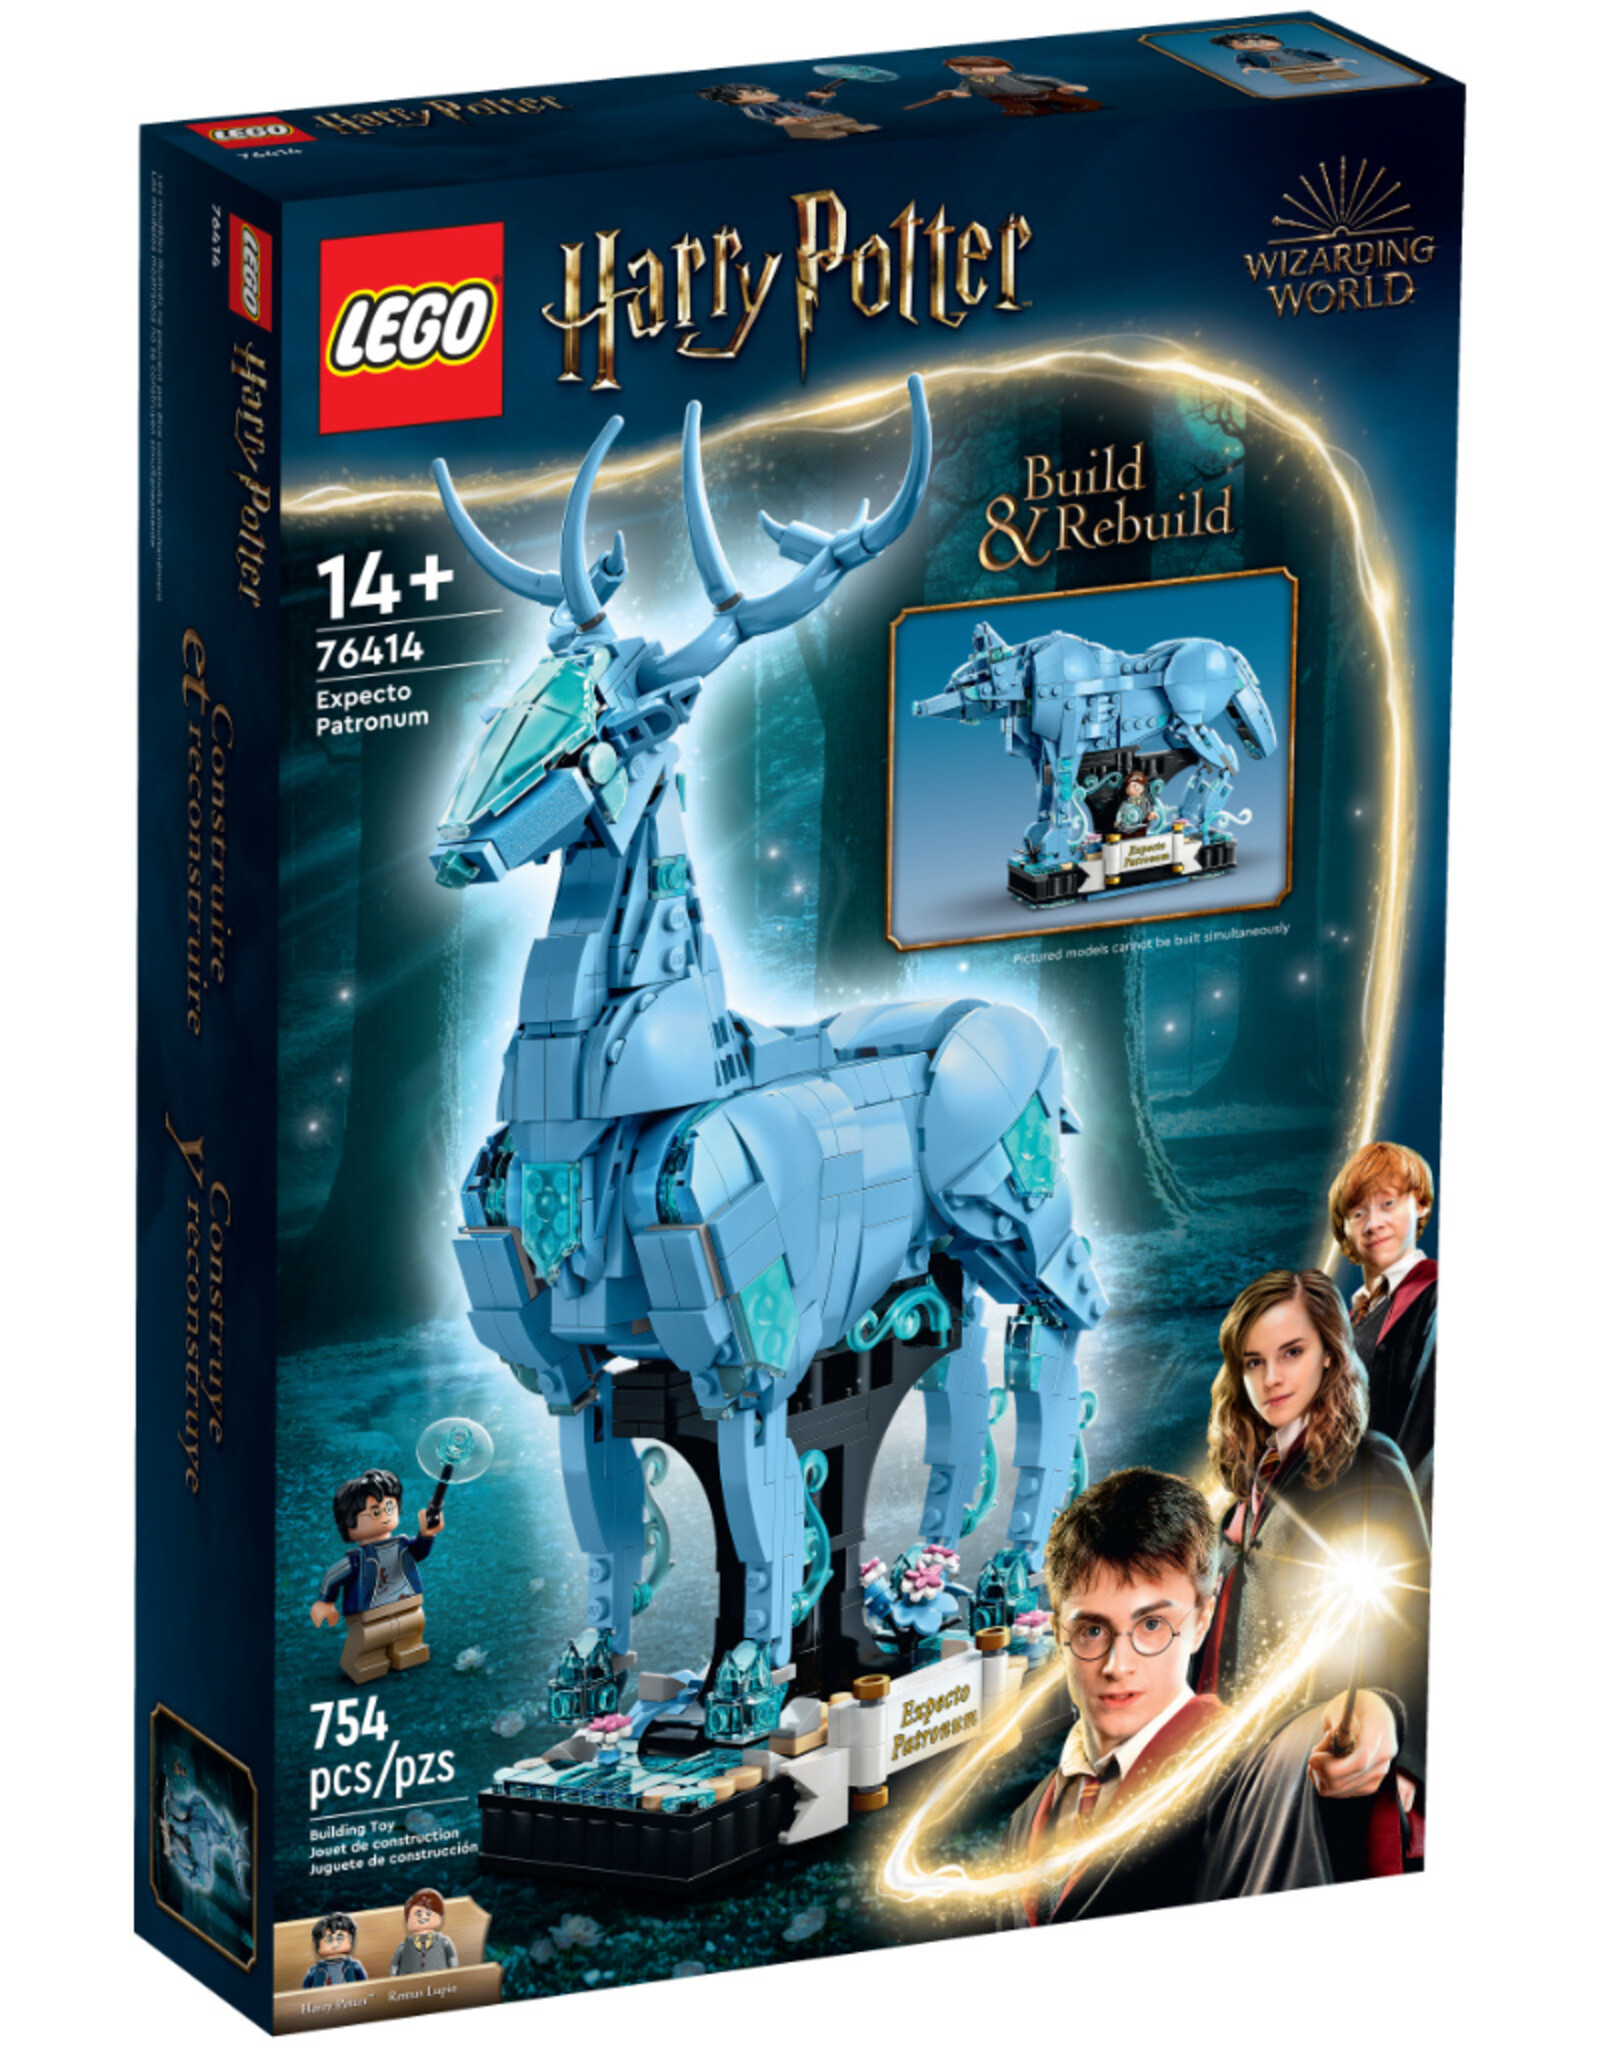 LEGO Harry Potter  76414 Expecto Patronum